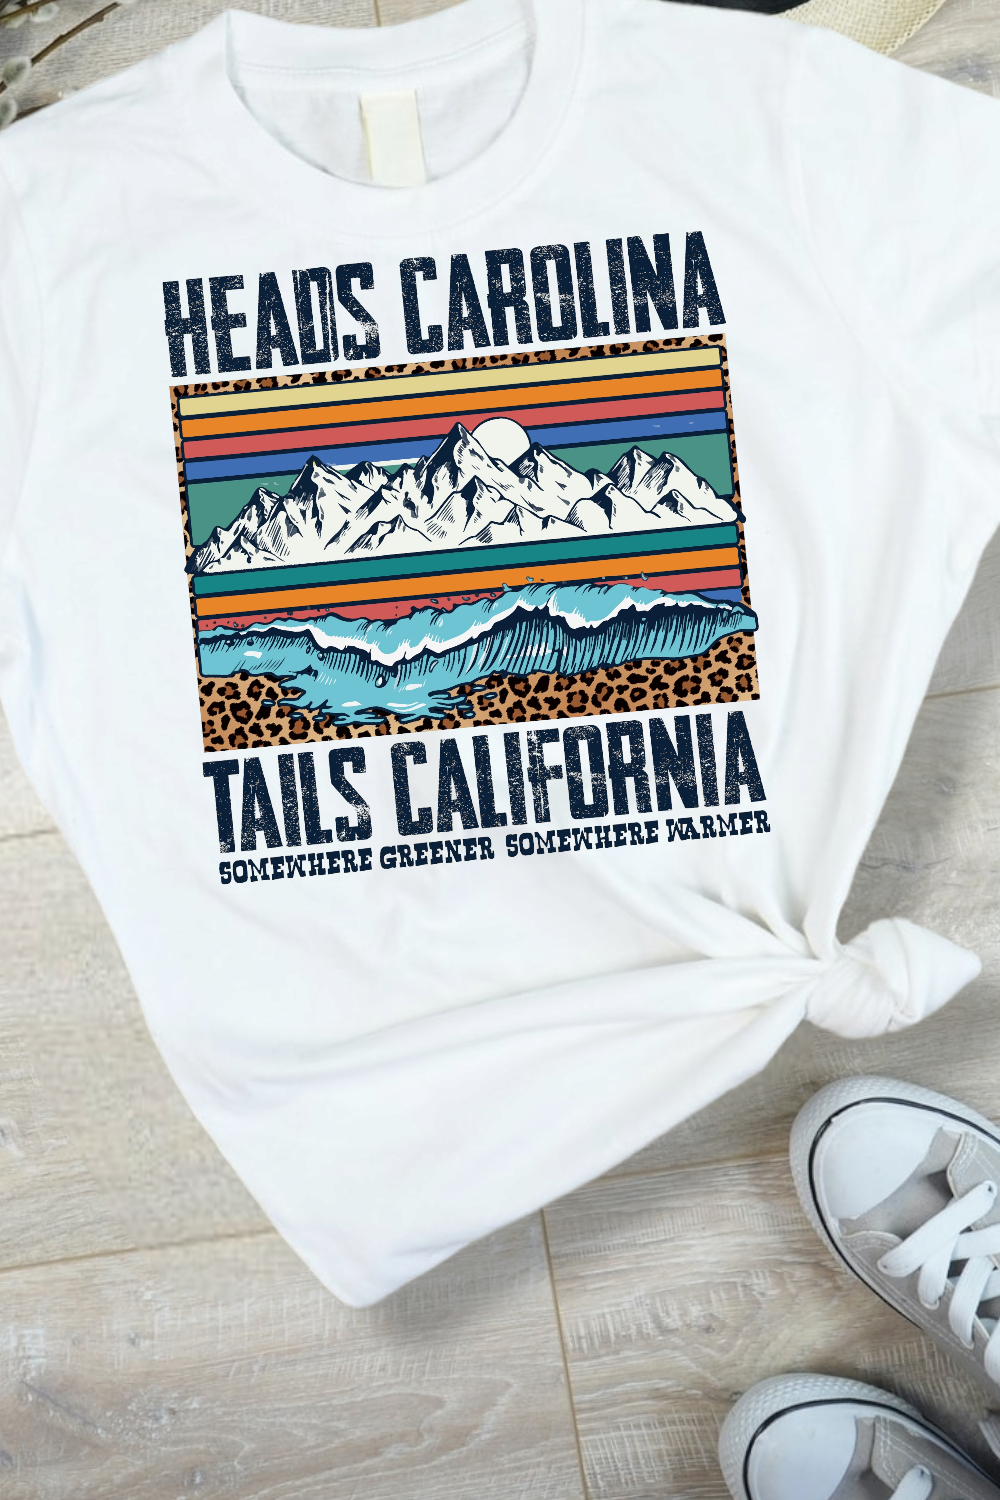 HEADS CAROLINA TAILS CALIFORNIA